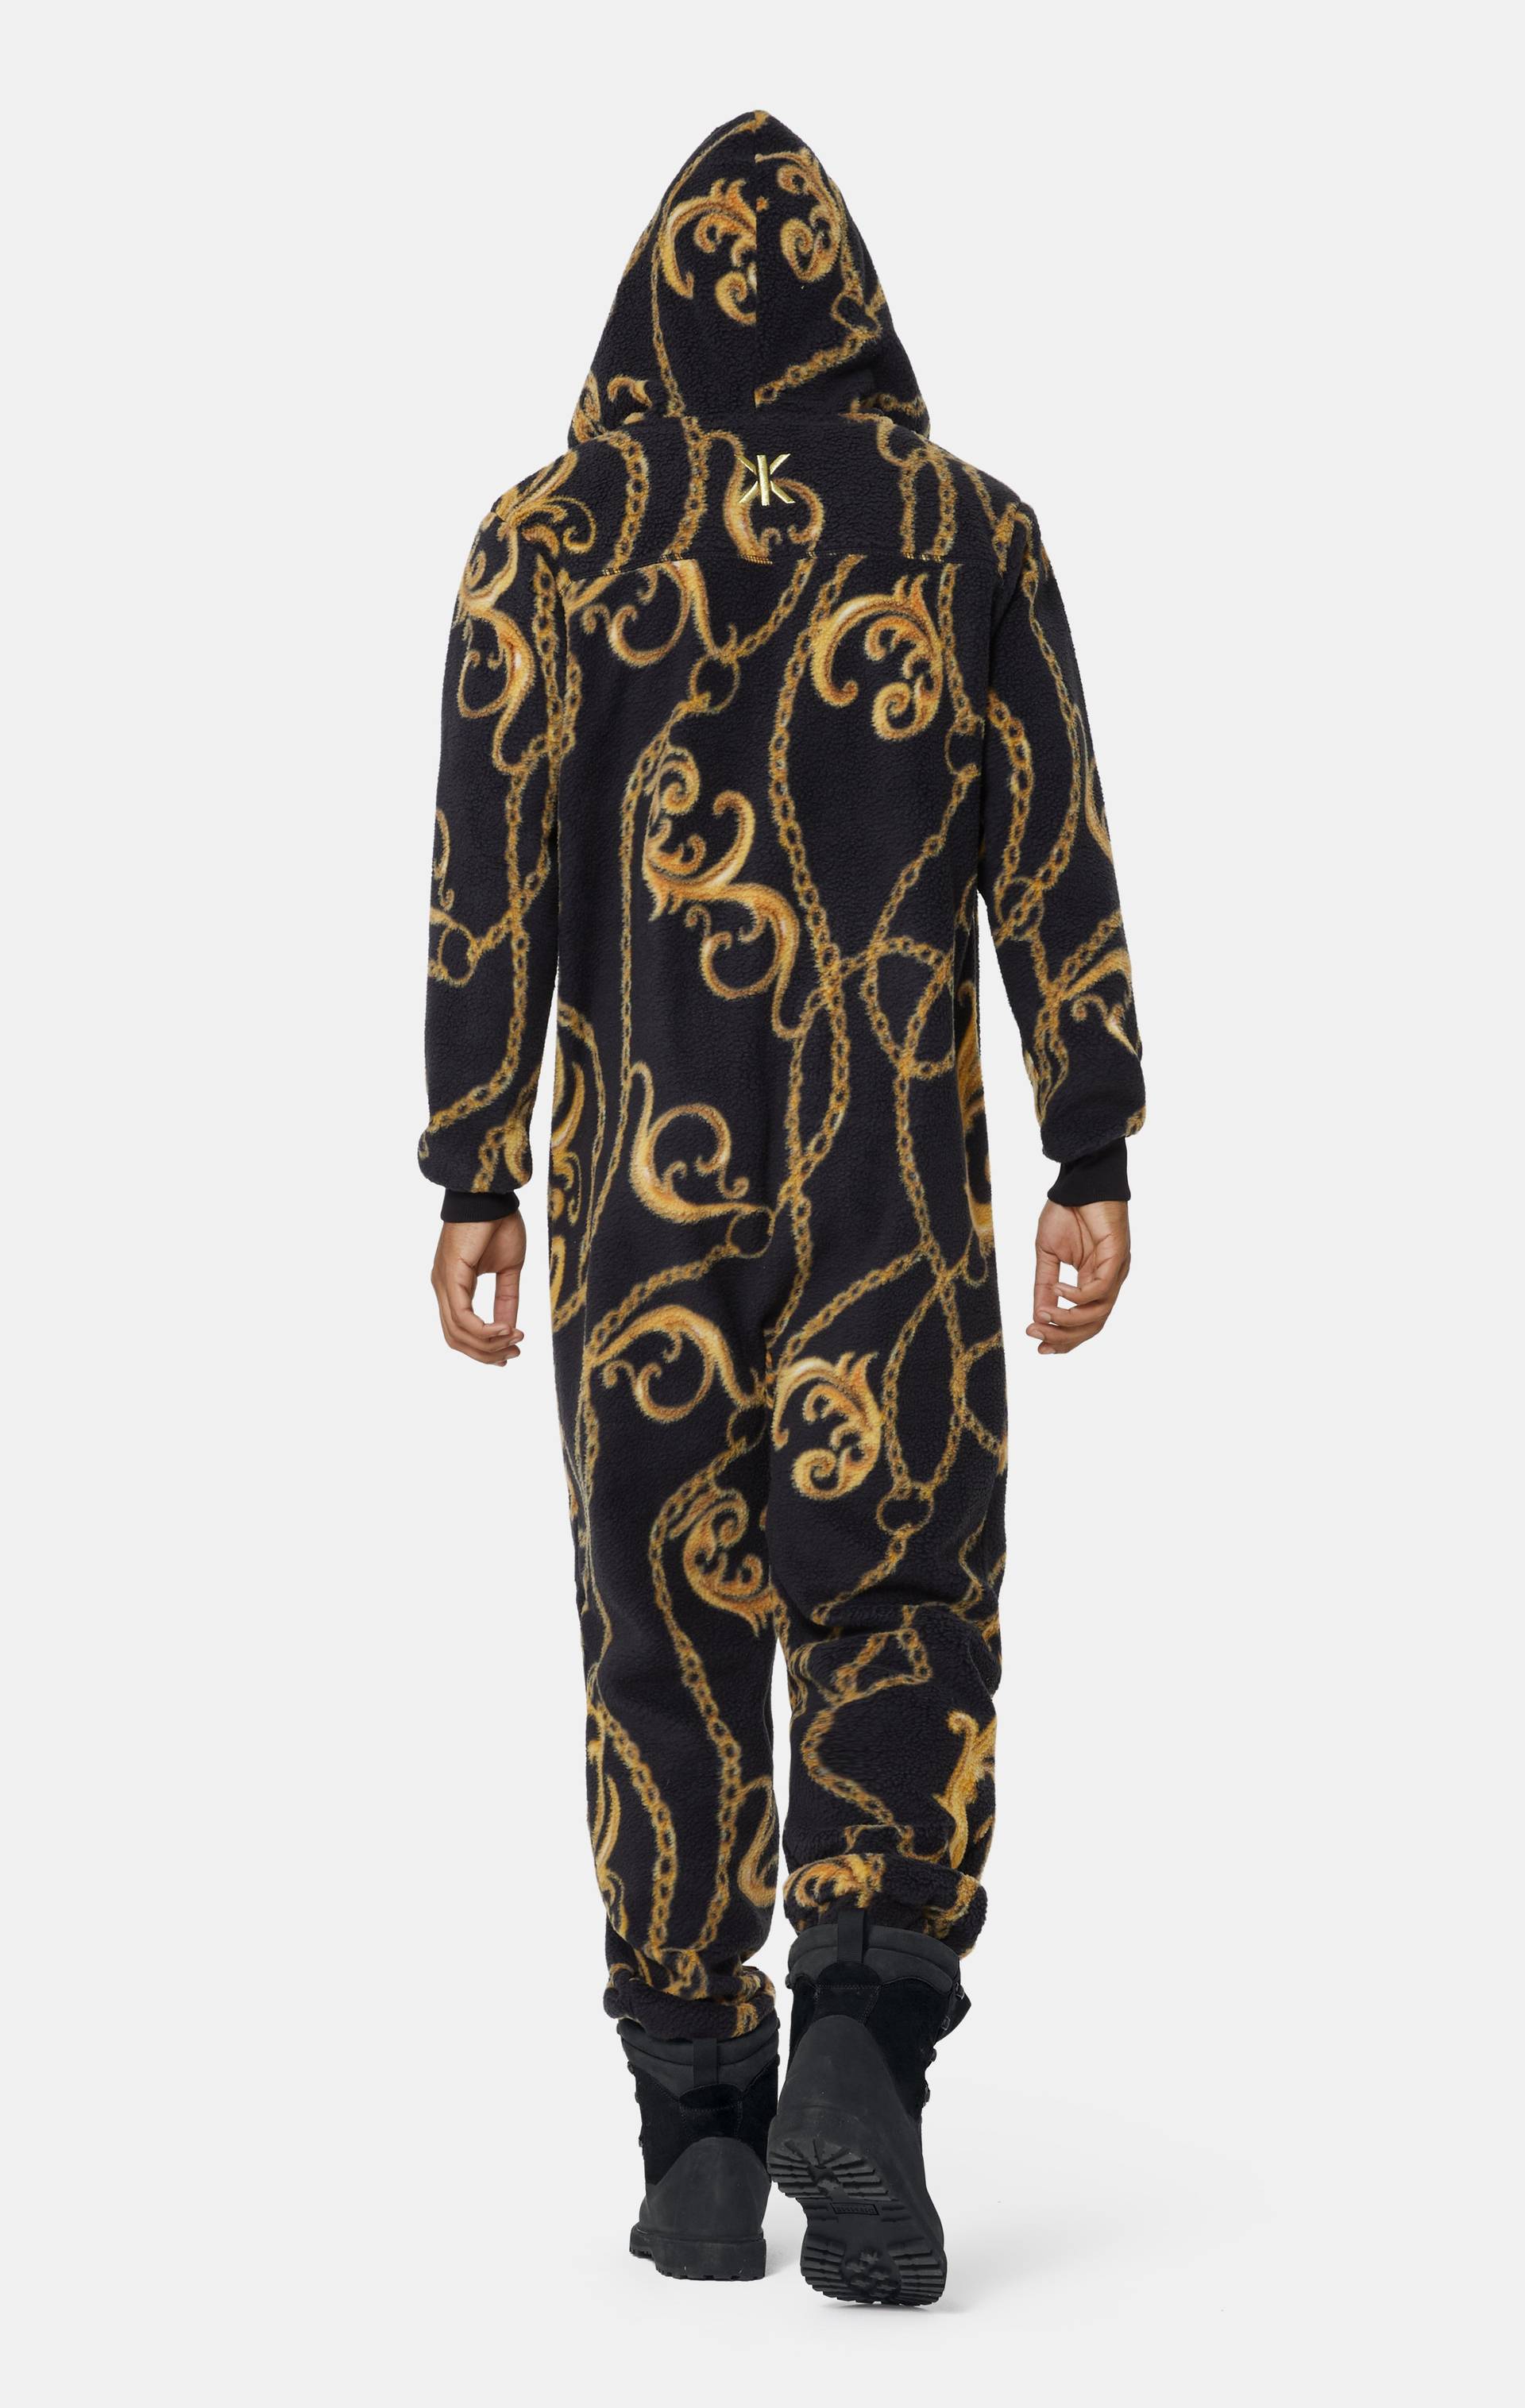 Onepiece Gold Chain Fleece Jumpsuit Black - 6